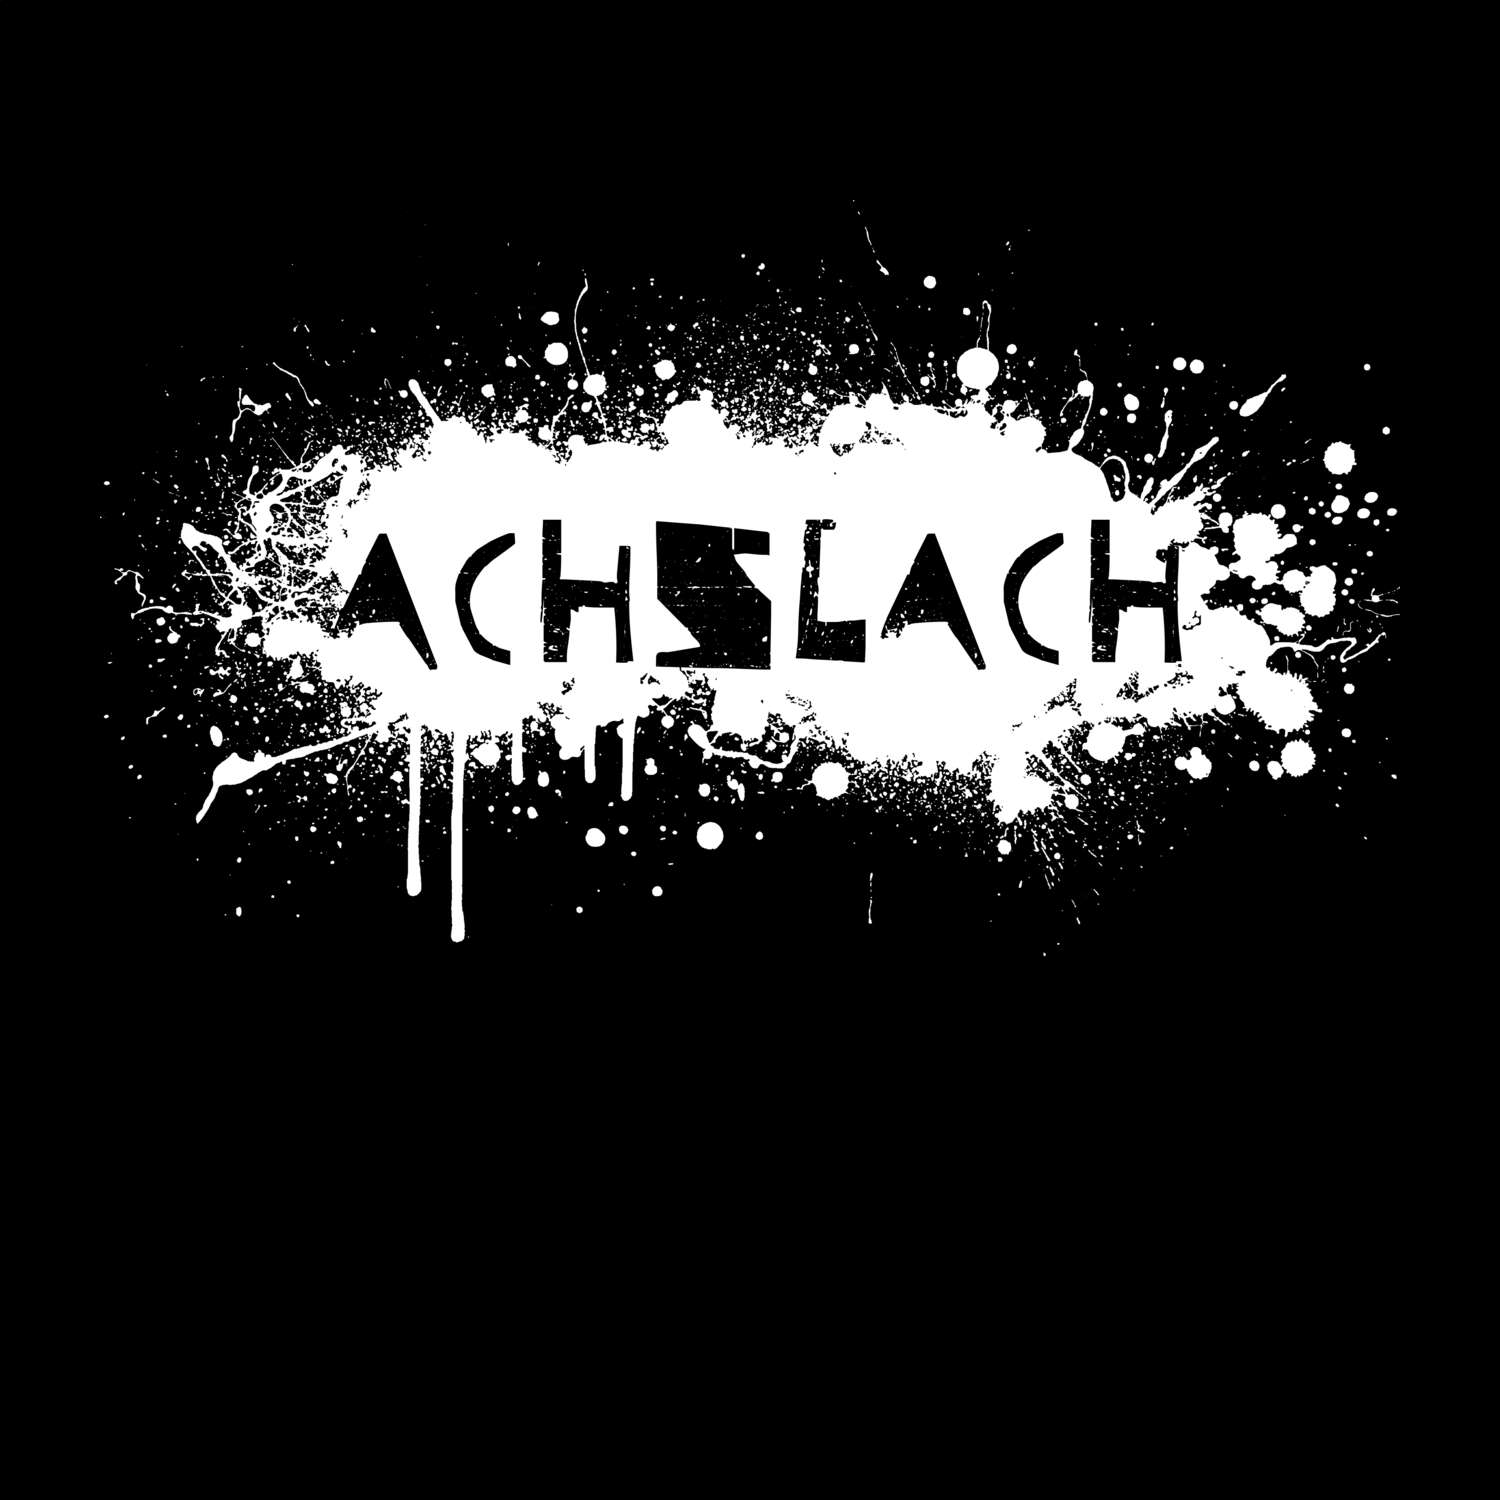 Achslach T-Shirt »Paint Splash Punk«